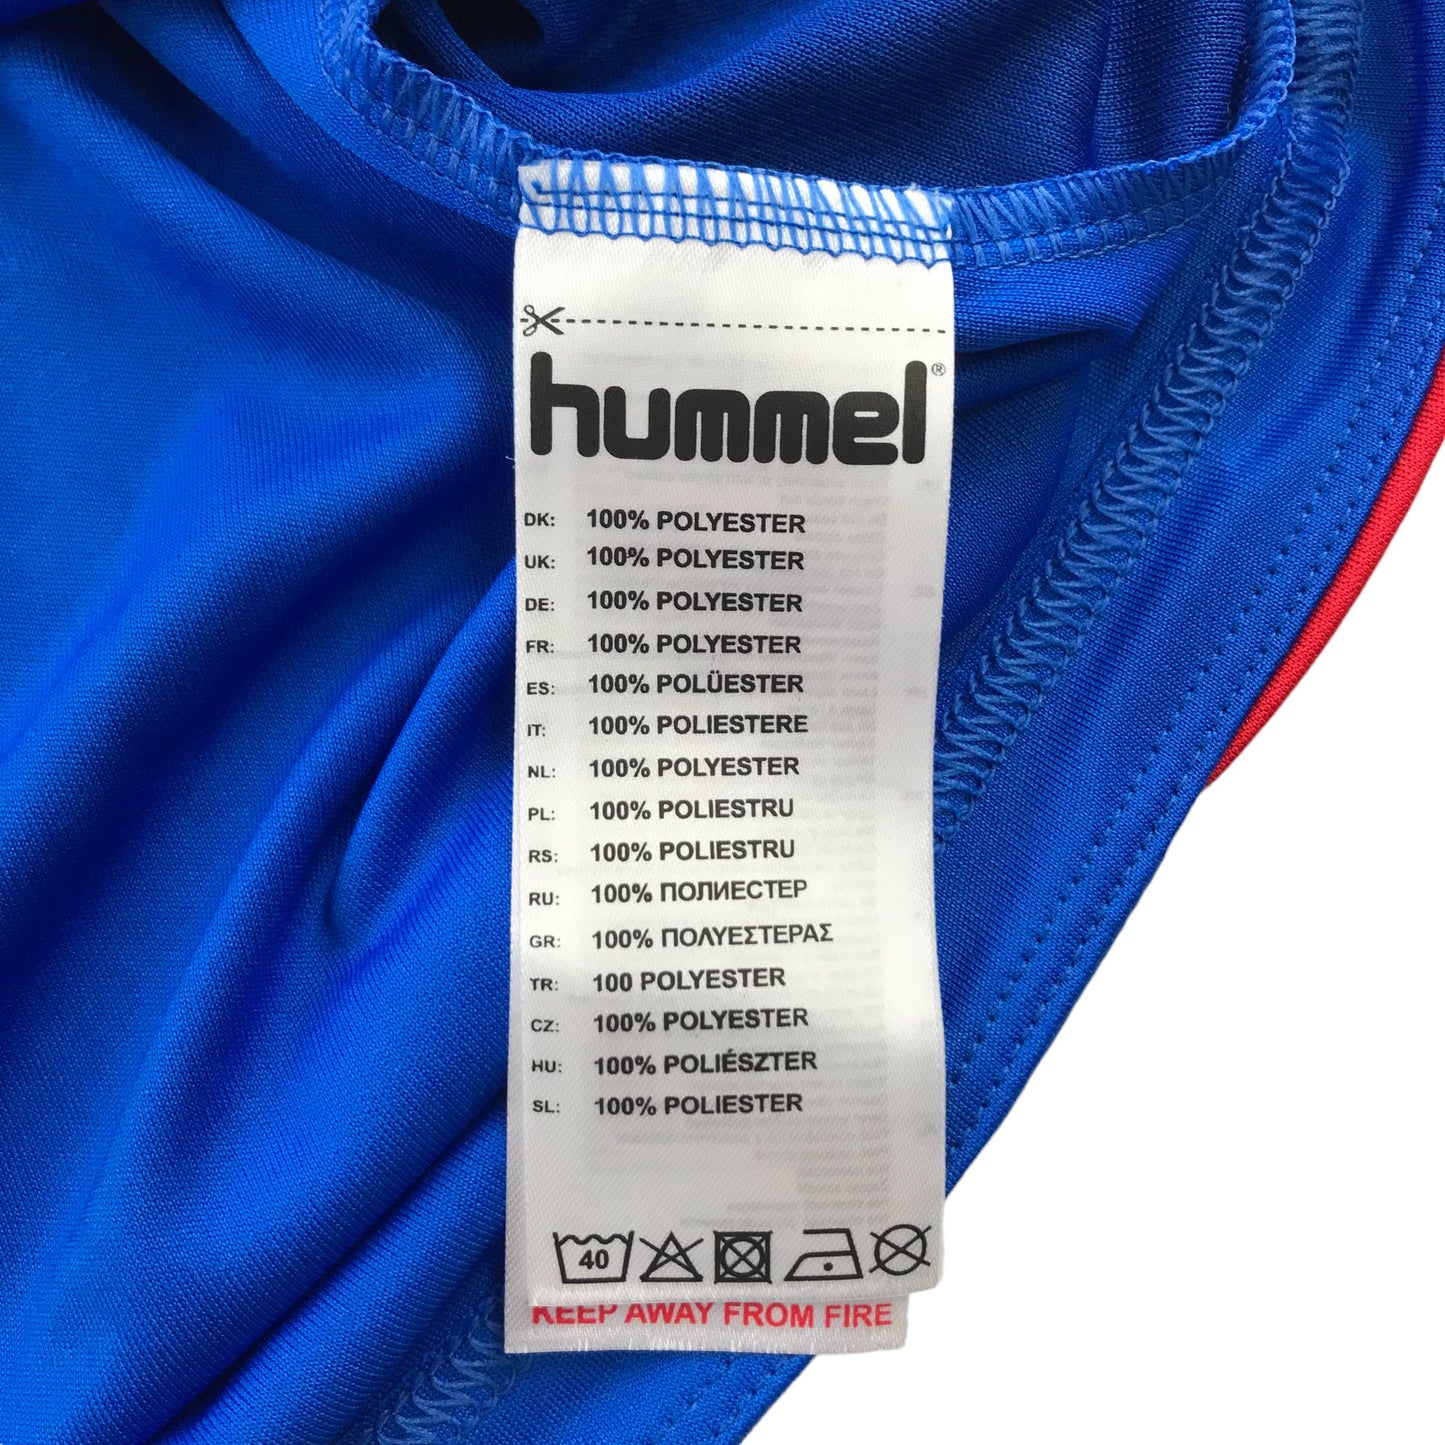 Hummel Rangers 18-19 home kit strip Age 14 Royal Blue Official Team Sports Apparel